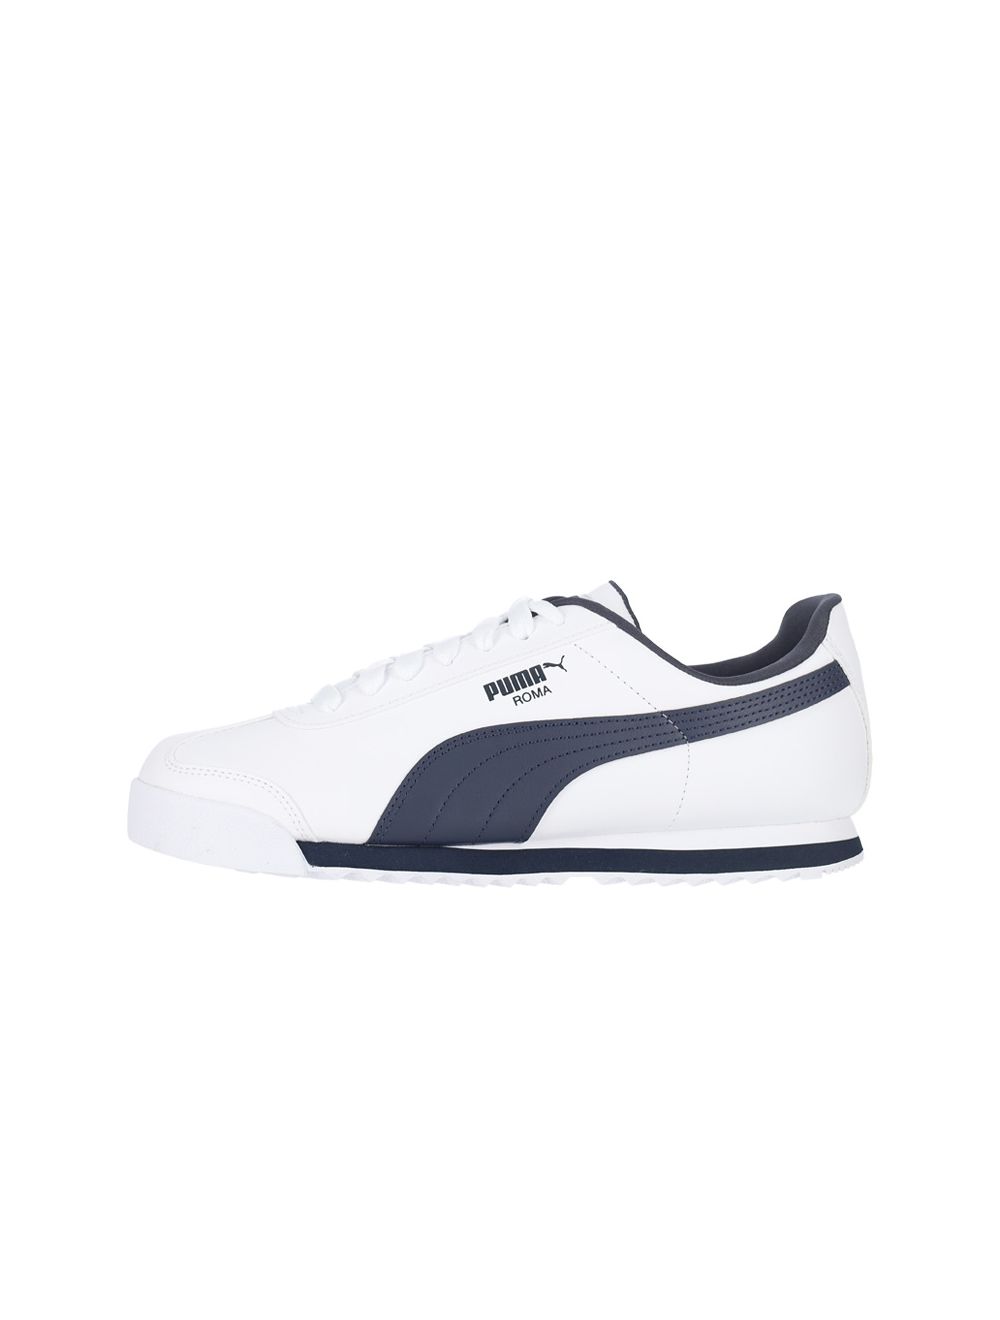 Shop Puma Roma Basic Shoe Mens White/Navy | Studio 88